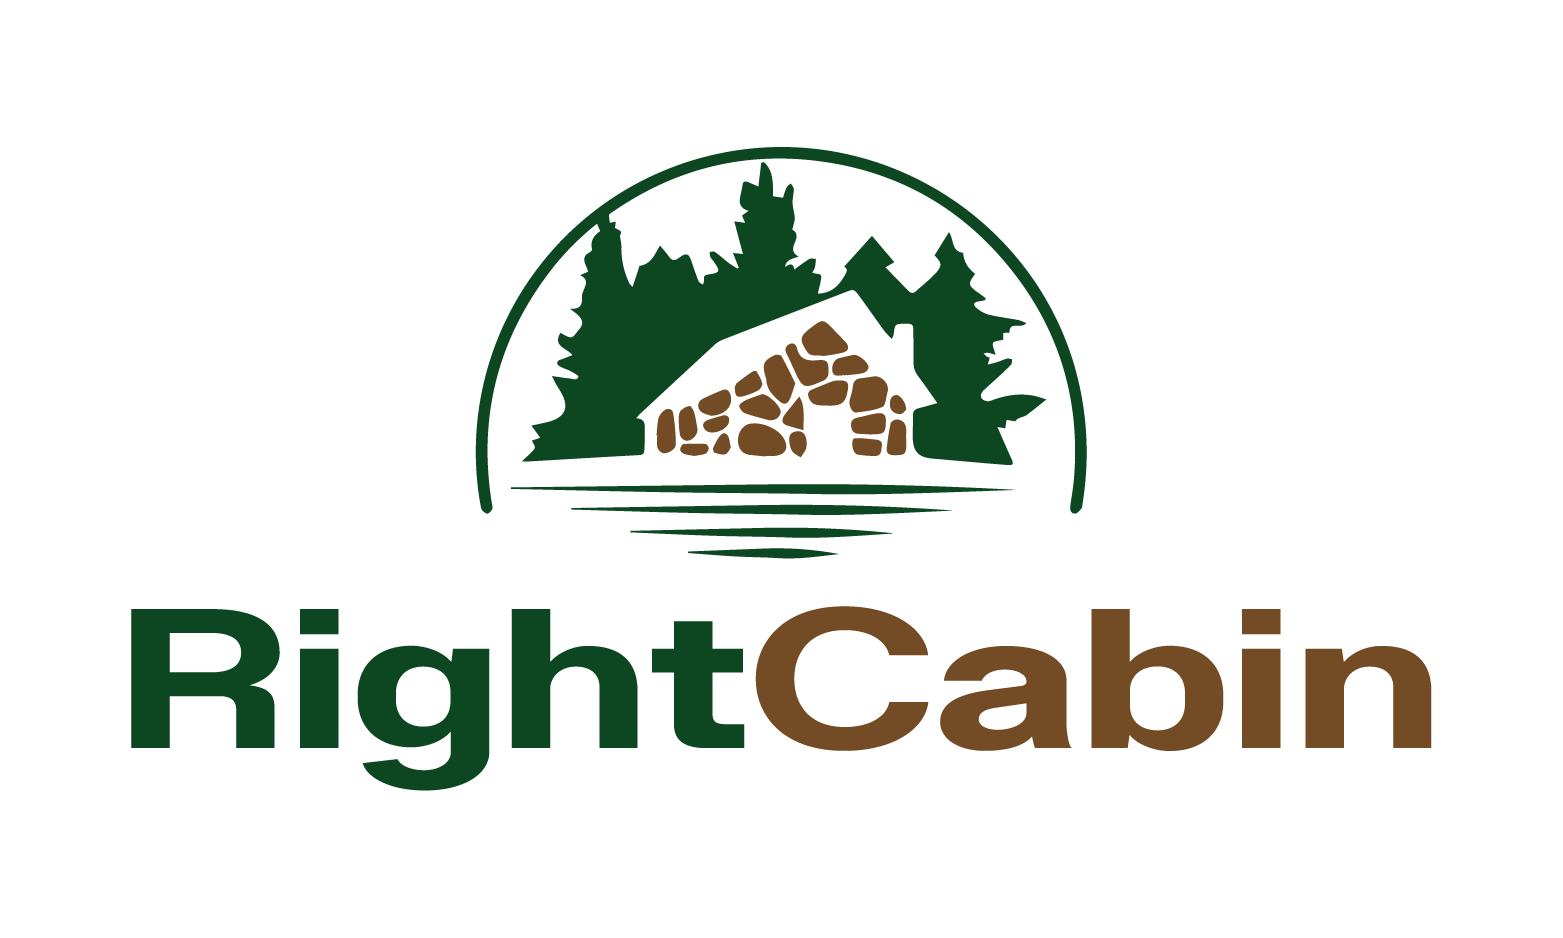 RightCabin.com - Creative brandable domain for sale